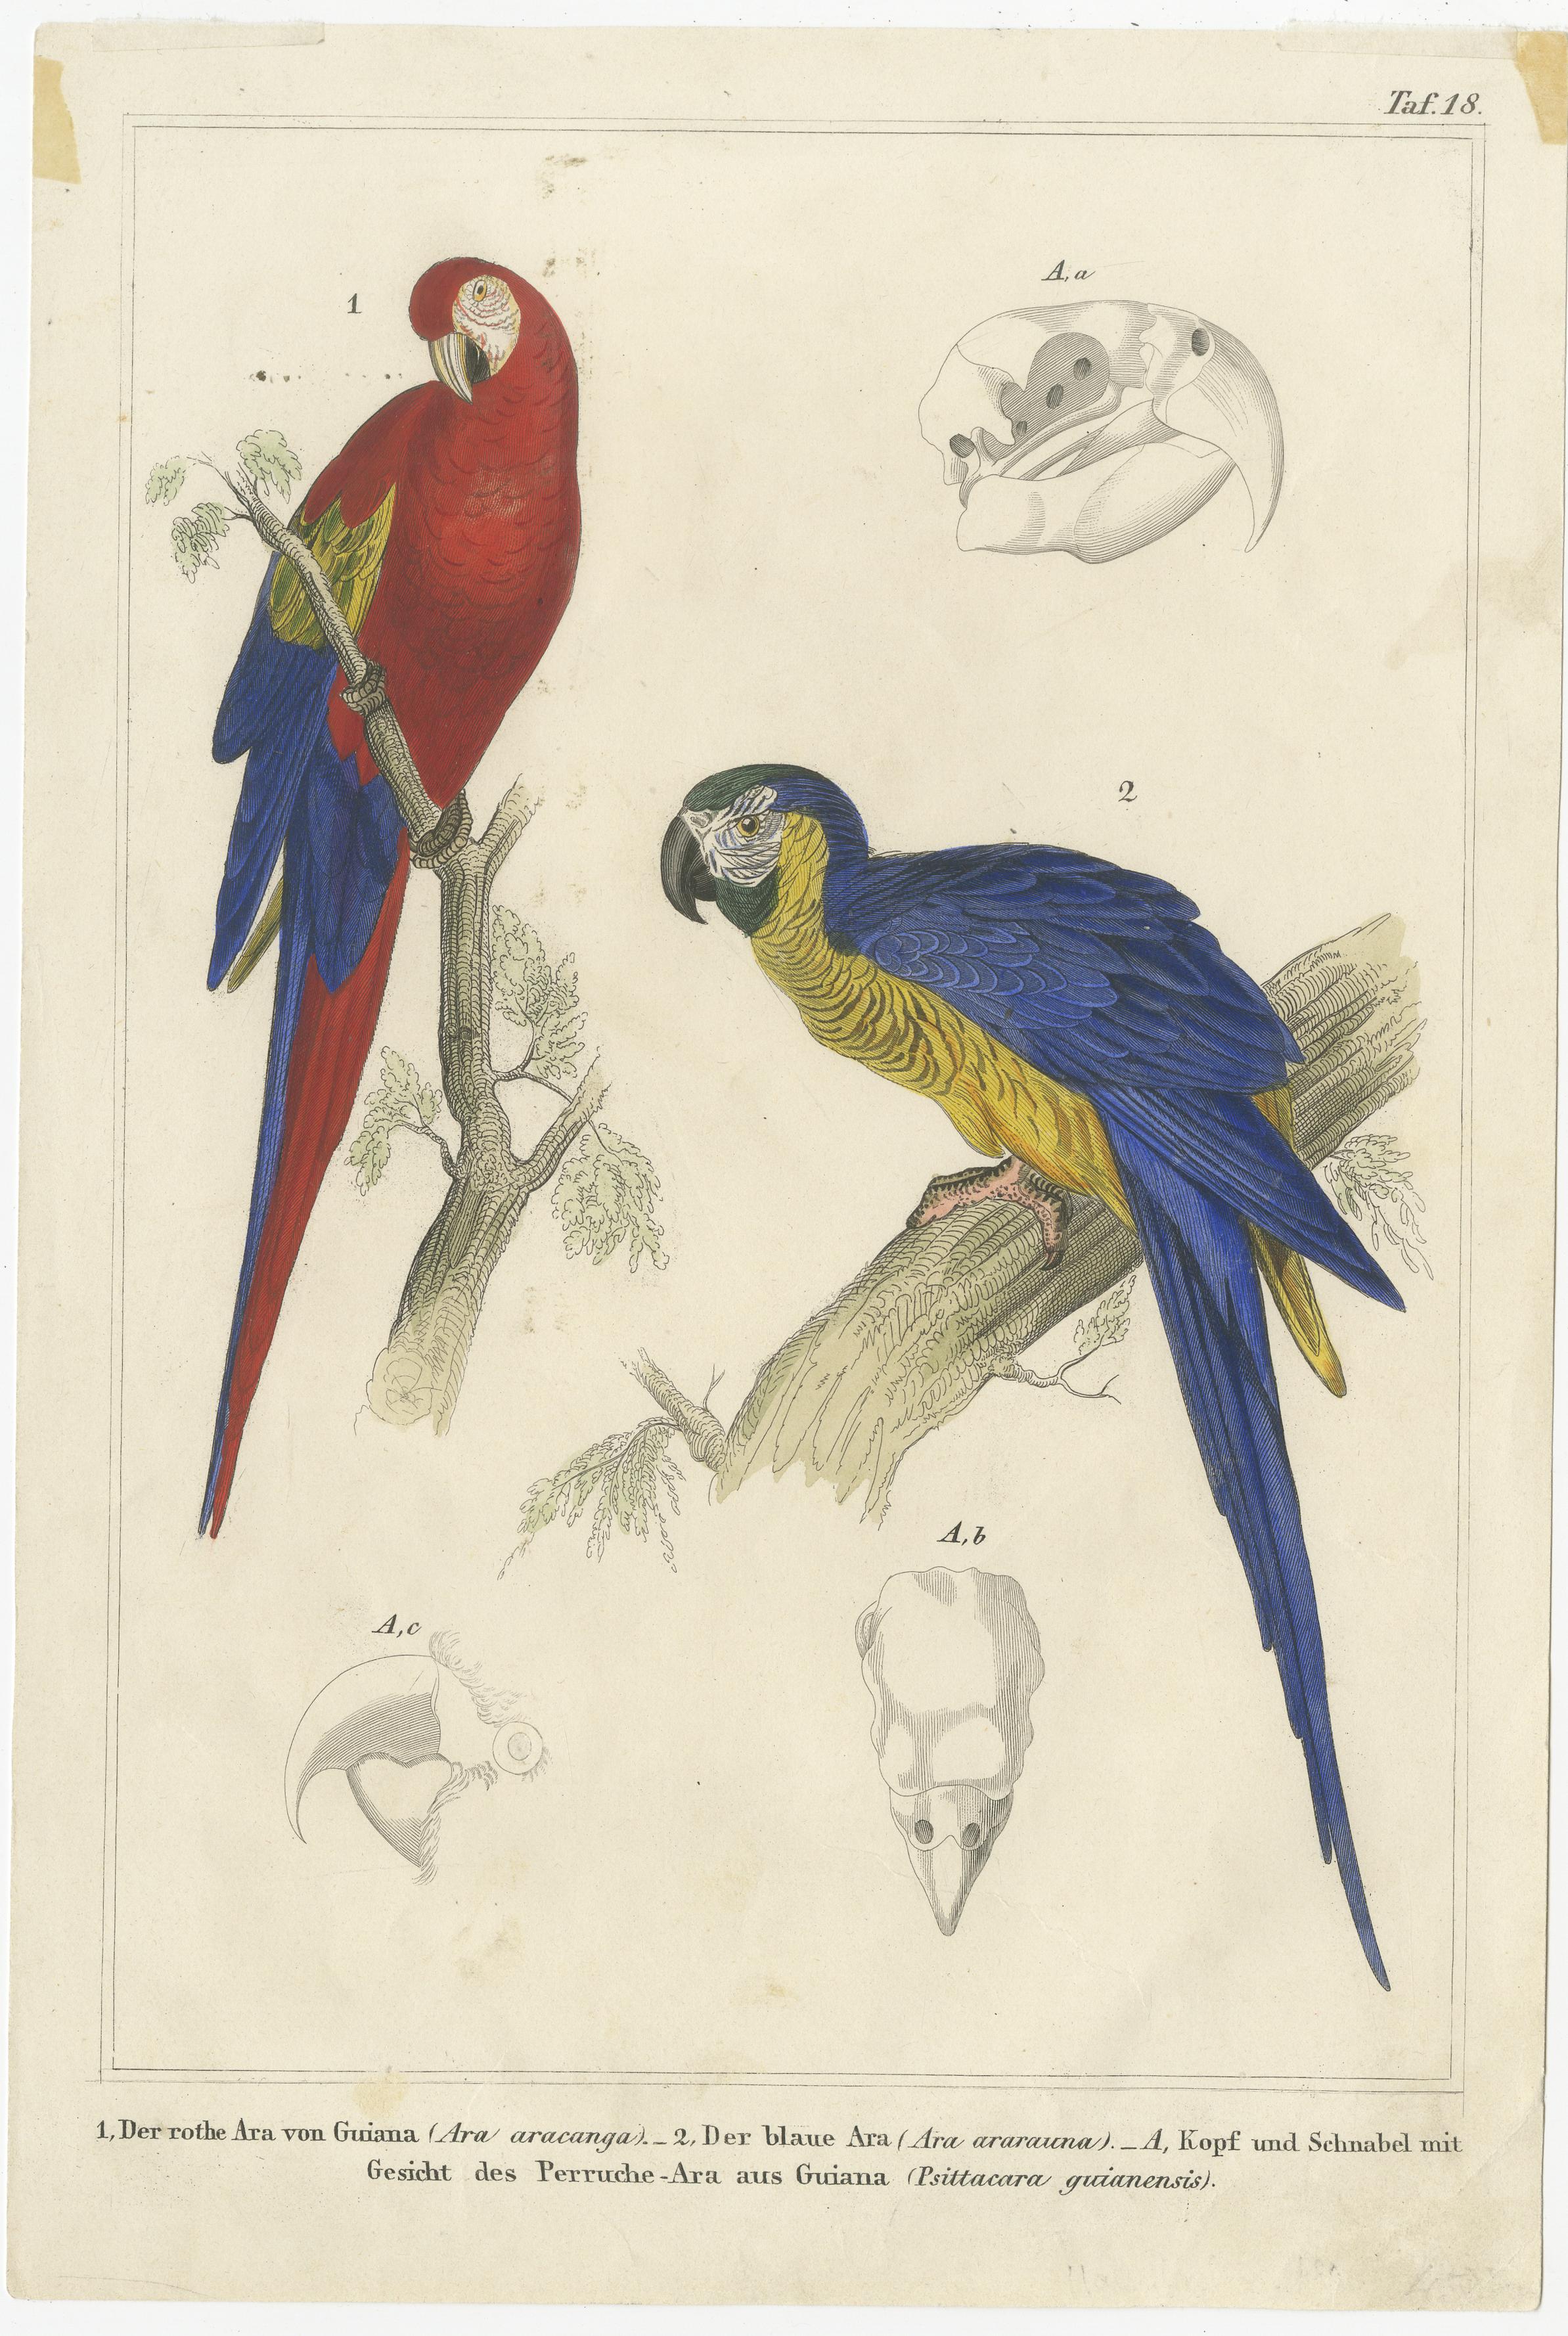 Antique bird print titled 'Der rothe Ara von Guiana (..) Der blaue Ara (..)'. This print originates from 'Naturgeschichte der Vögel (..)' by Dr. A. B. Reichenbach. Published 1855. 

This illustration showcases two species of macaws alongside